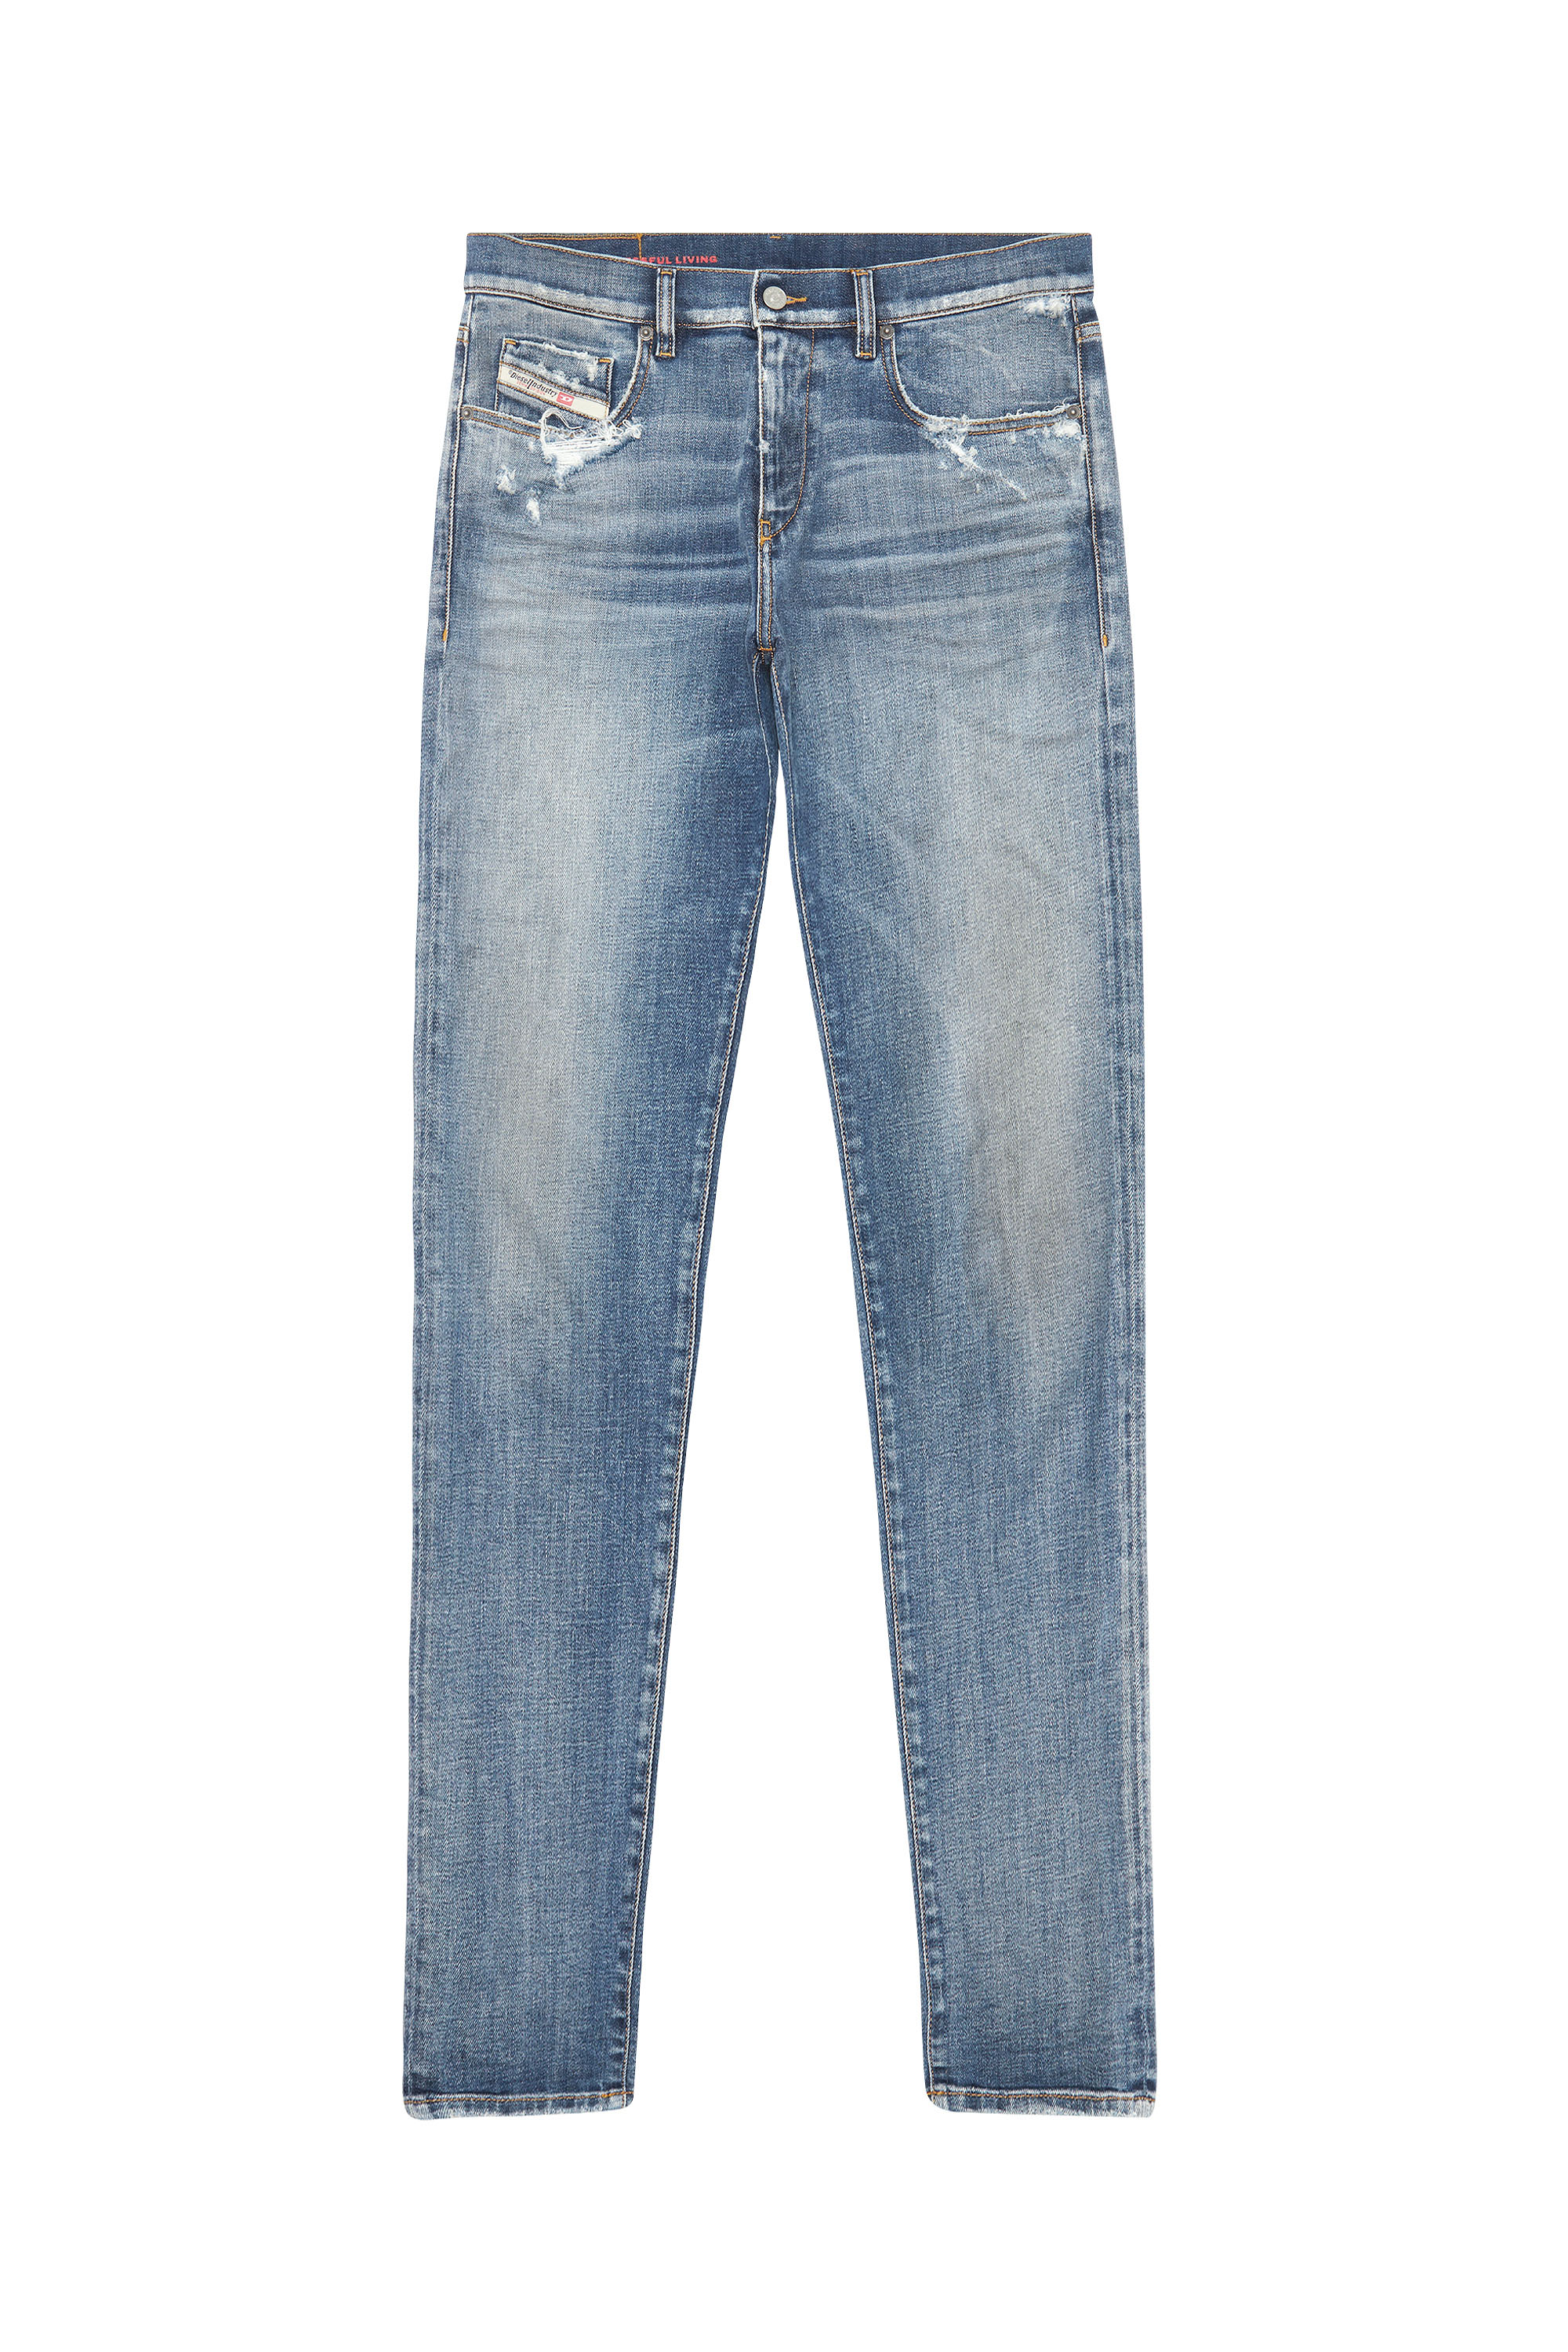 2019 D-STRUKT 09E15 Slim Jeans, Medium blue - Jeans